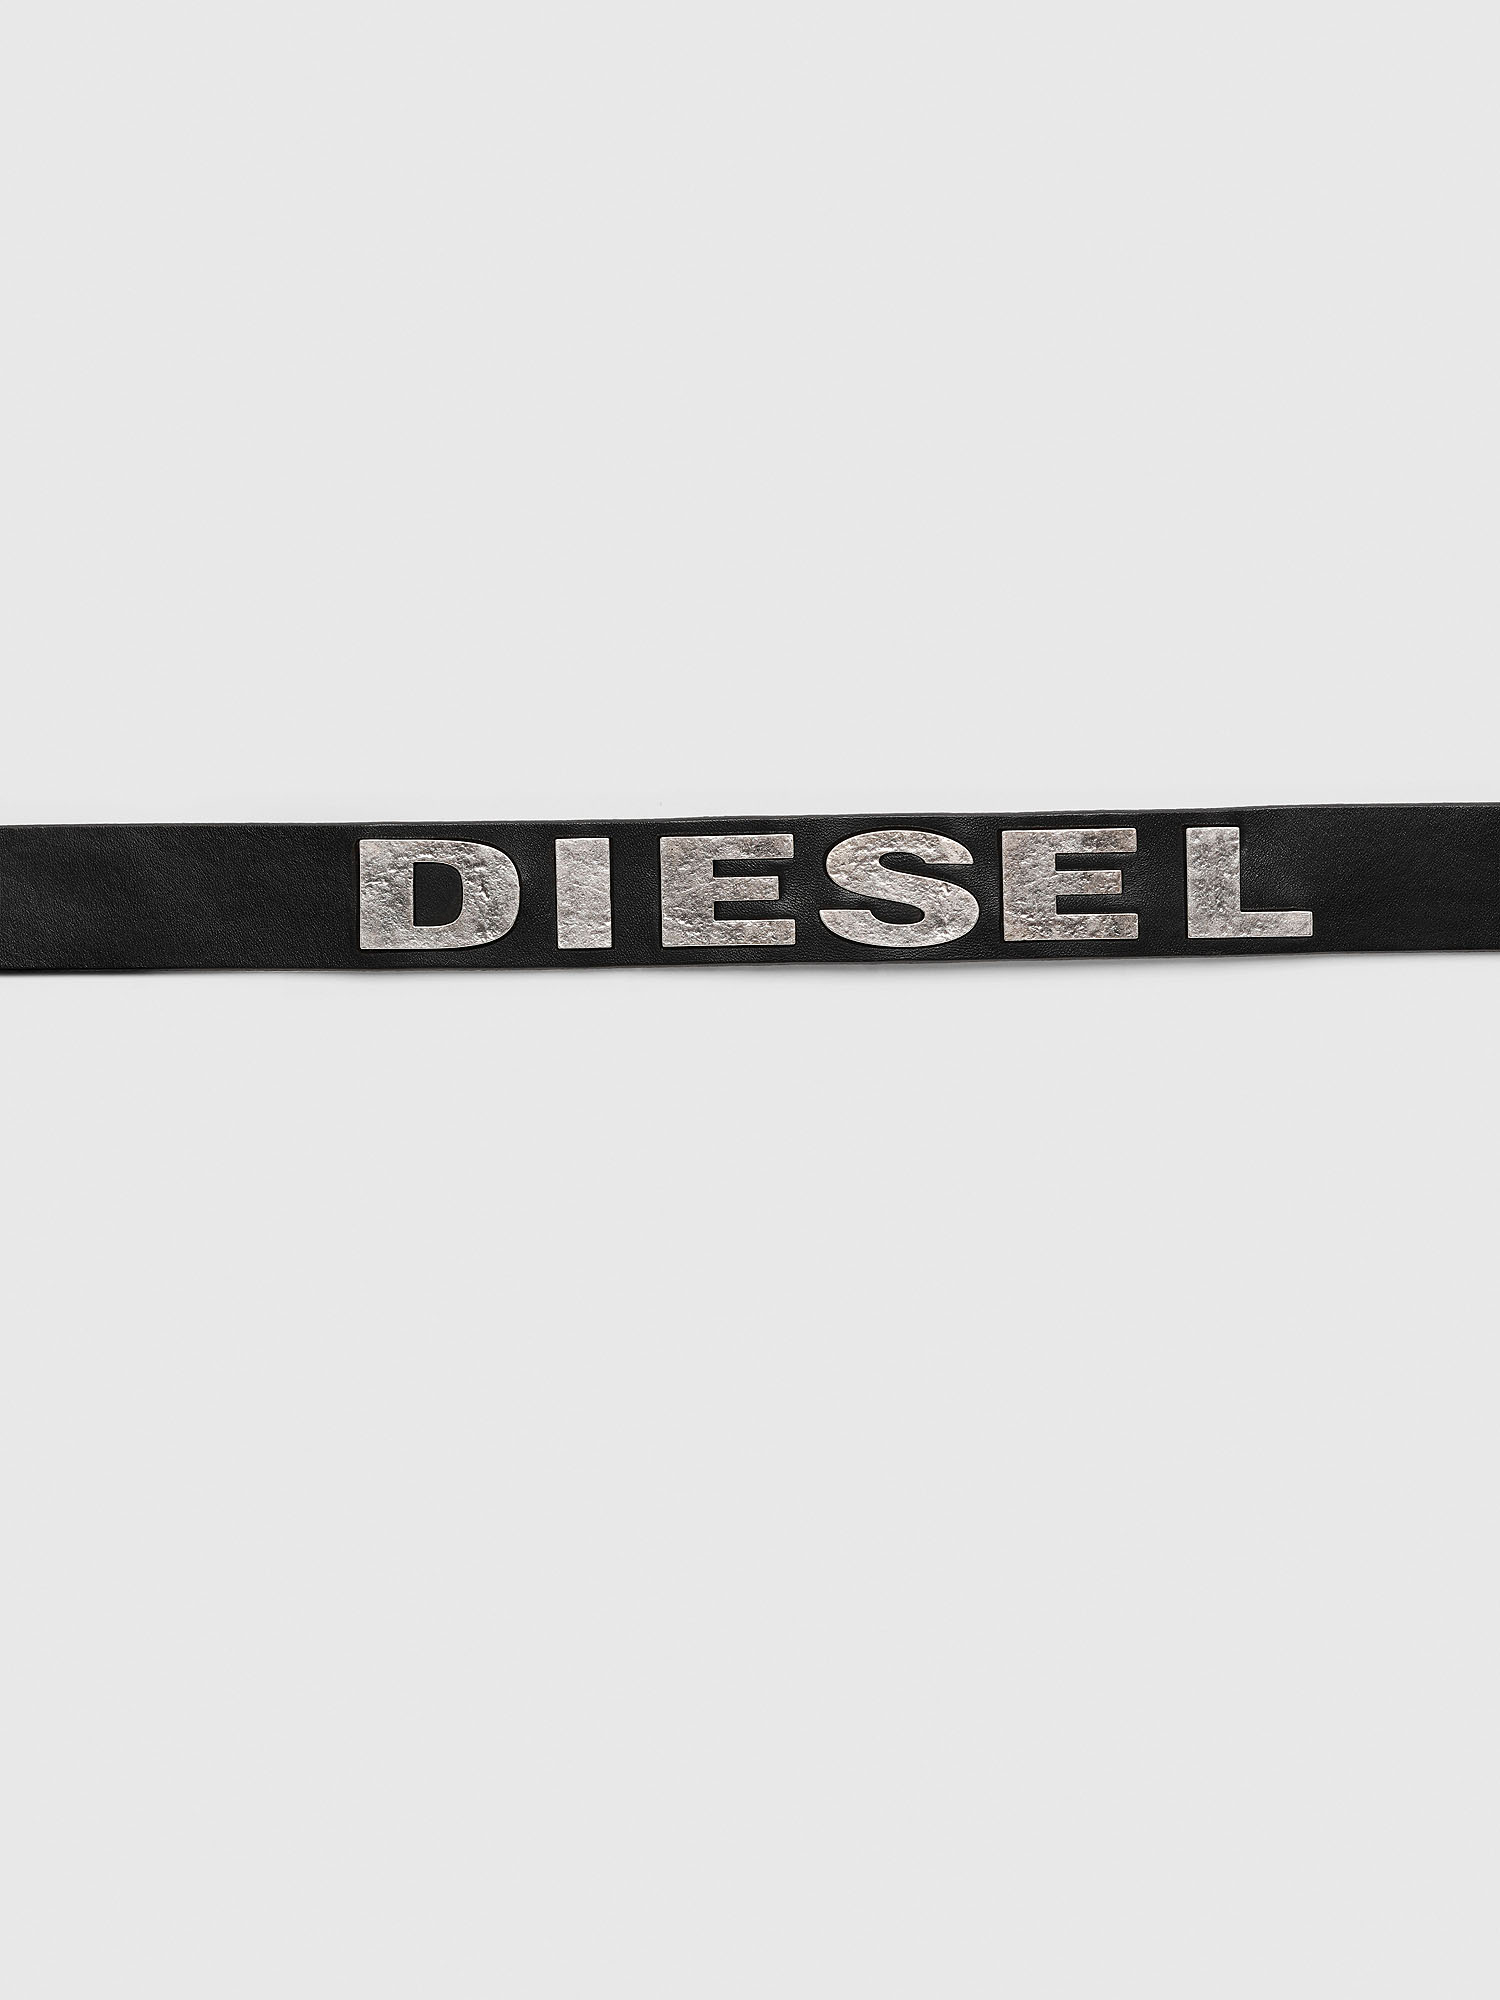 Diesel - B-BOLD, Black - Image 4